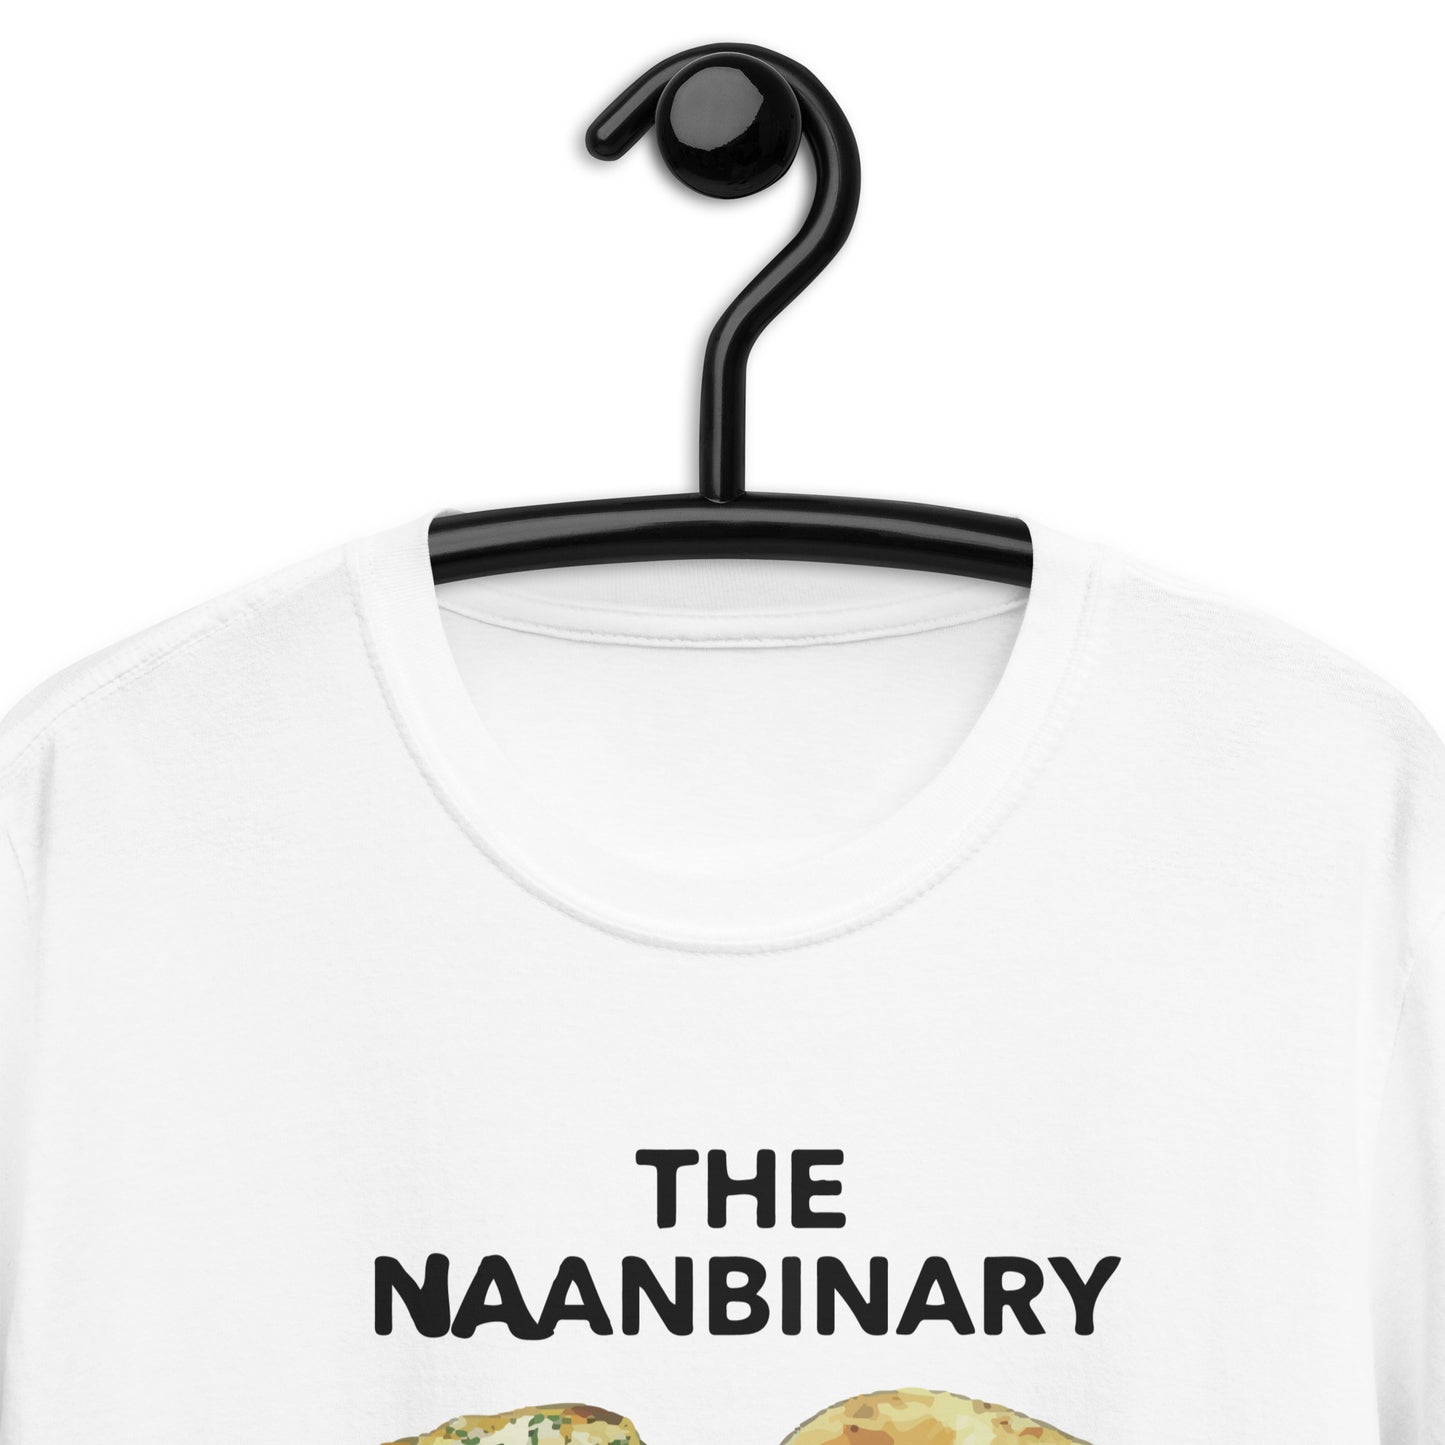 The Naanbinary Short-Sleeve Unisex T-Shirt